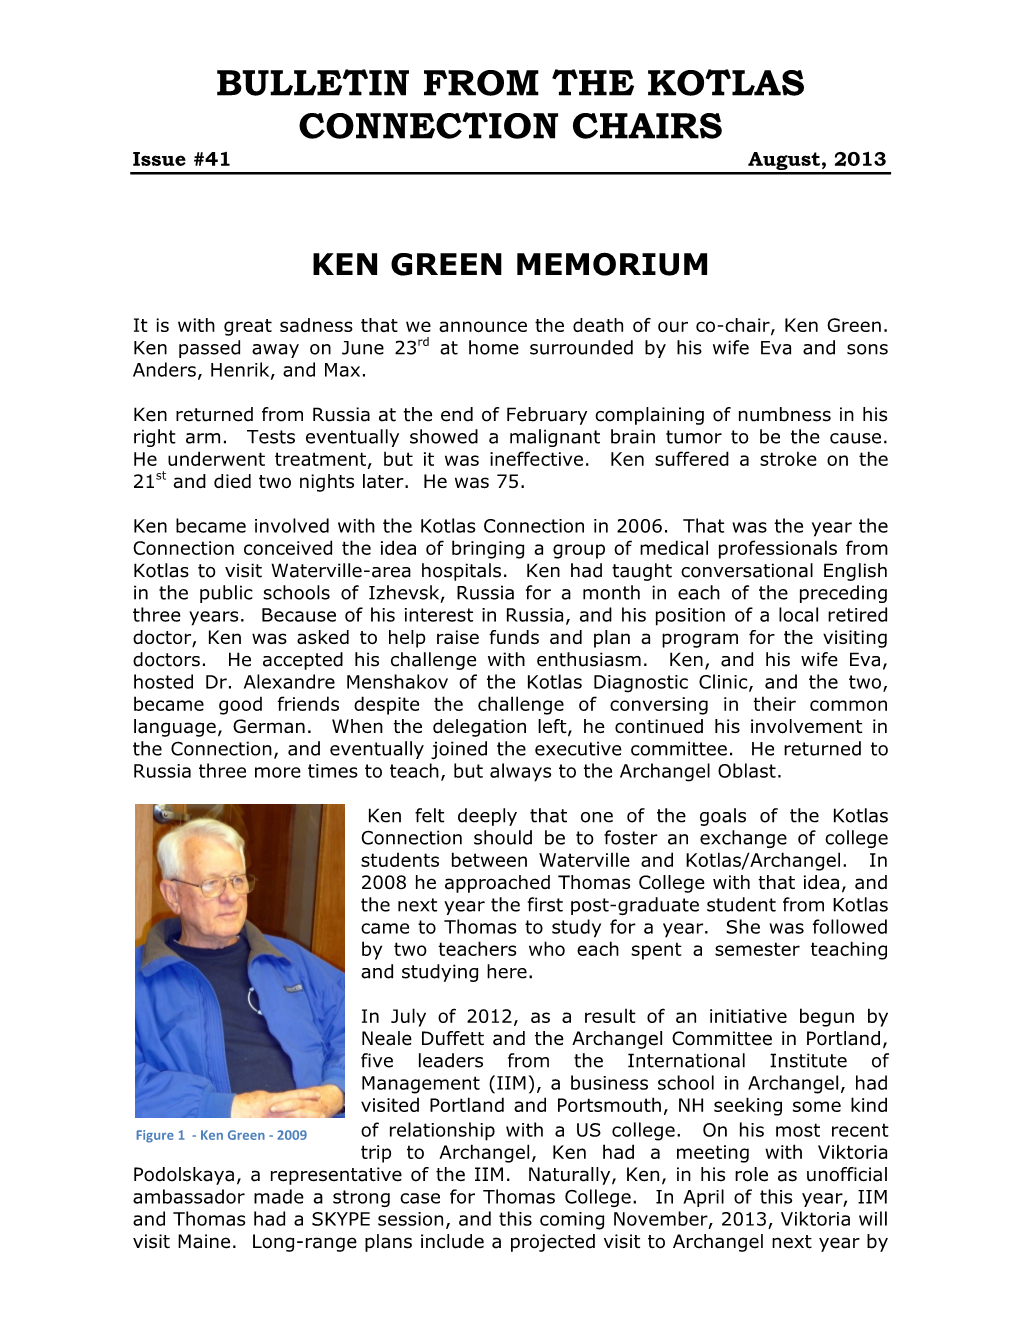 August 2013 Kotlas Chair's Bulletin